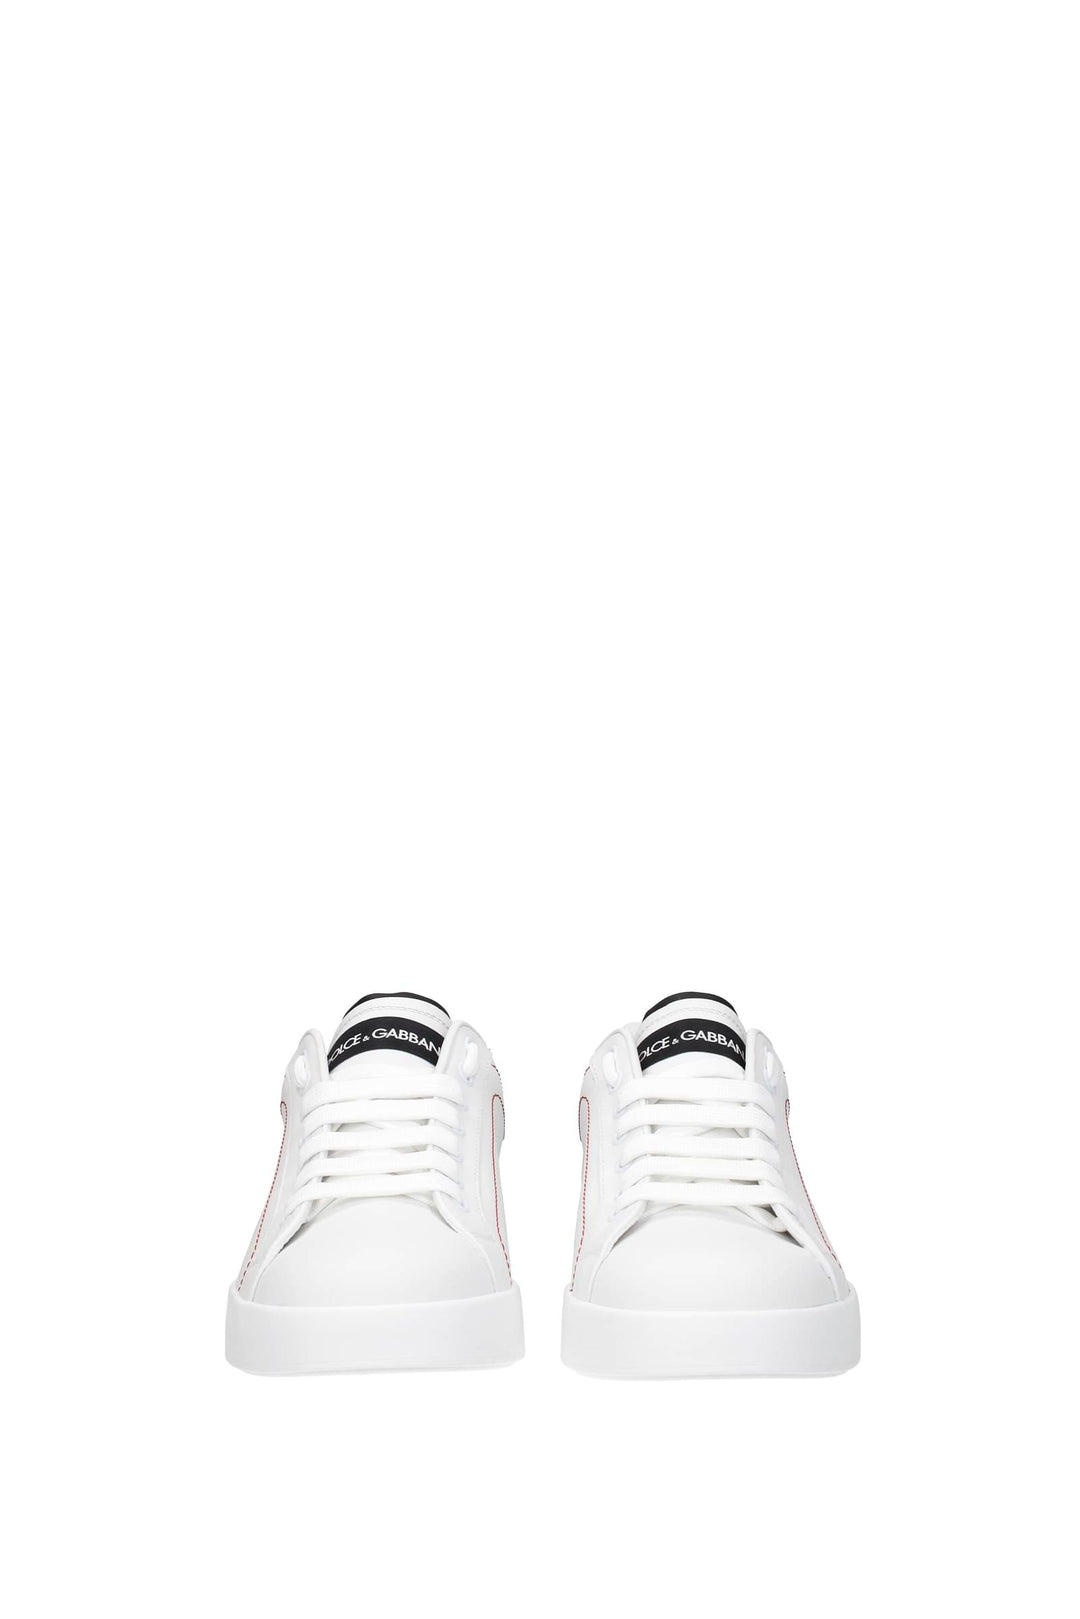 Dolce&Gabbana Sneakers Pelle Bianco - Dolce & Gabbana - Uomo